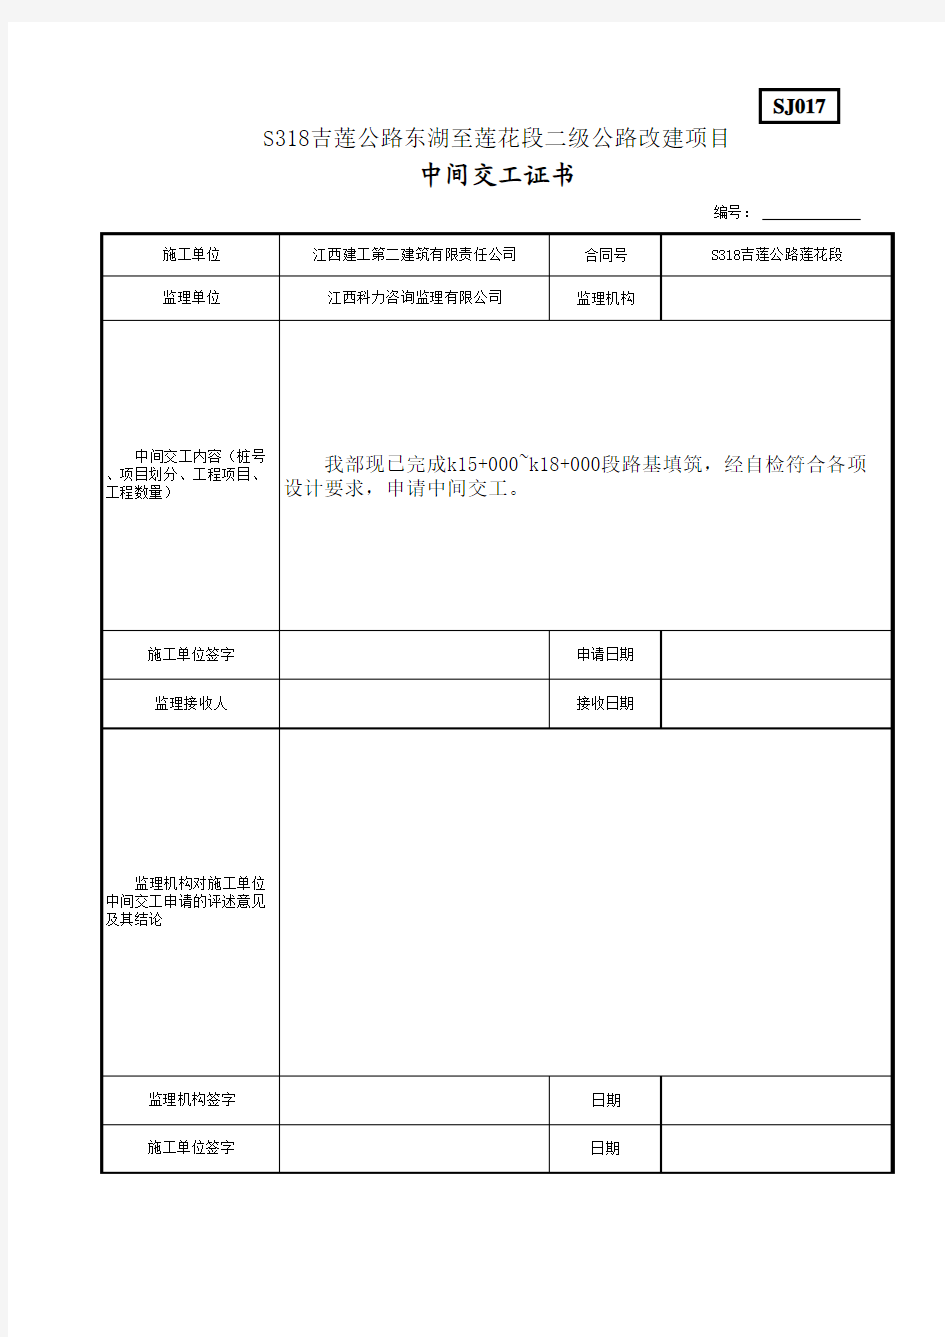 SJ017中间交工证书